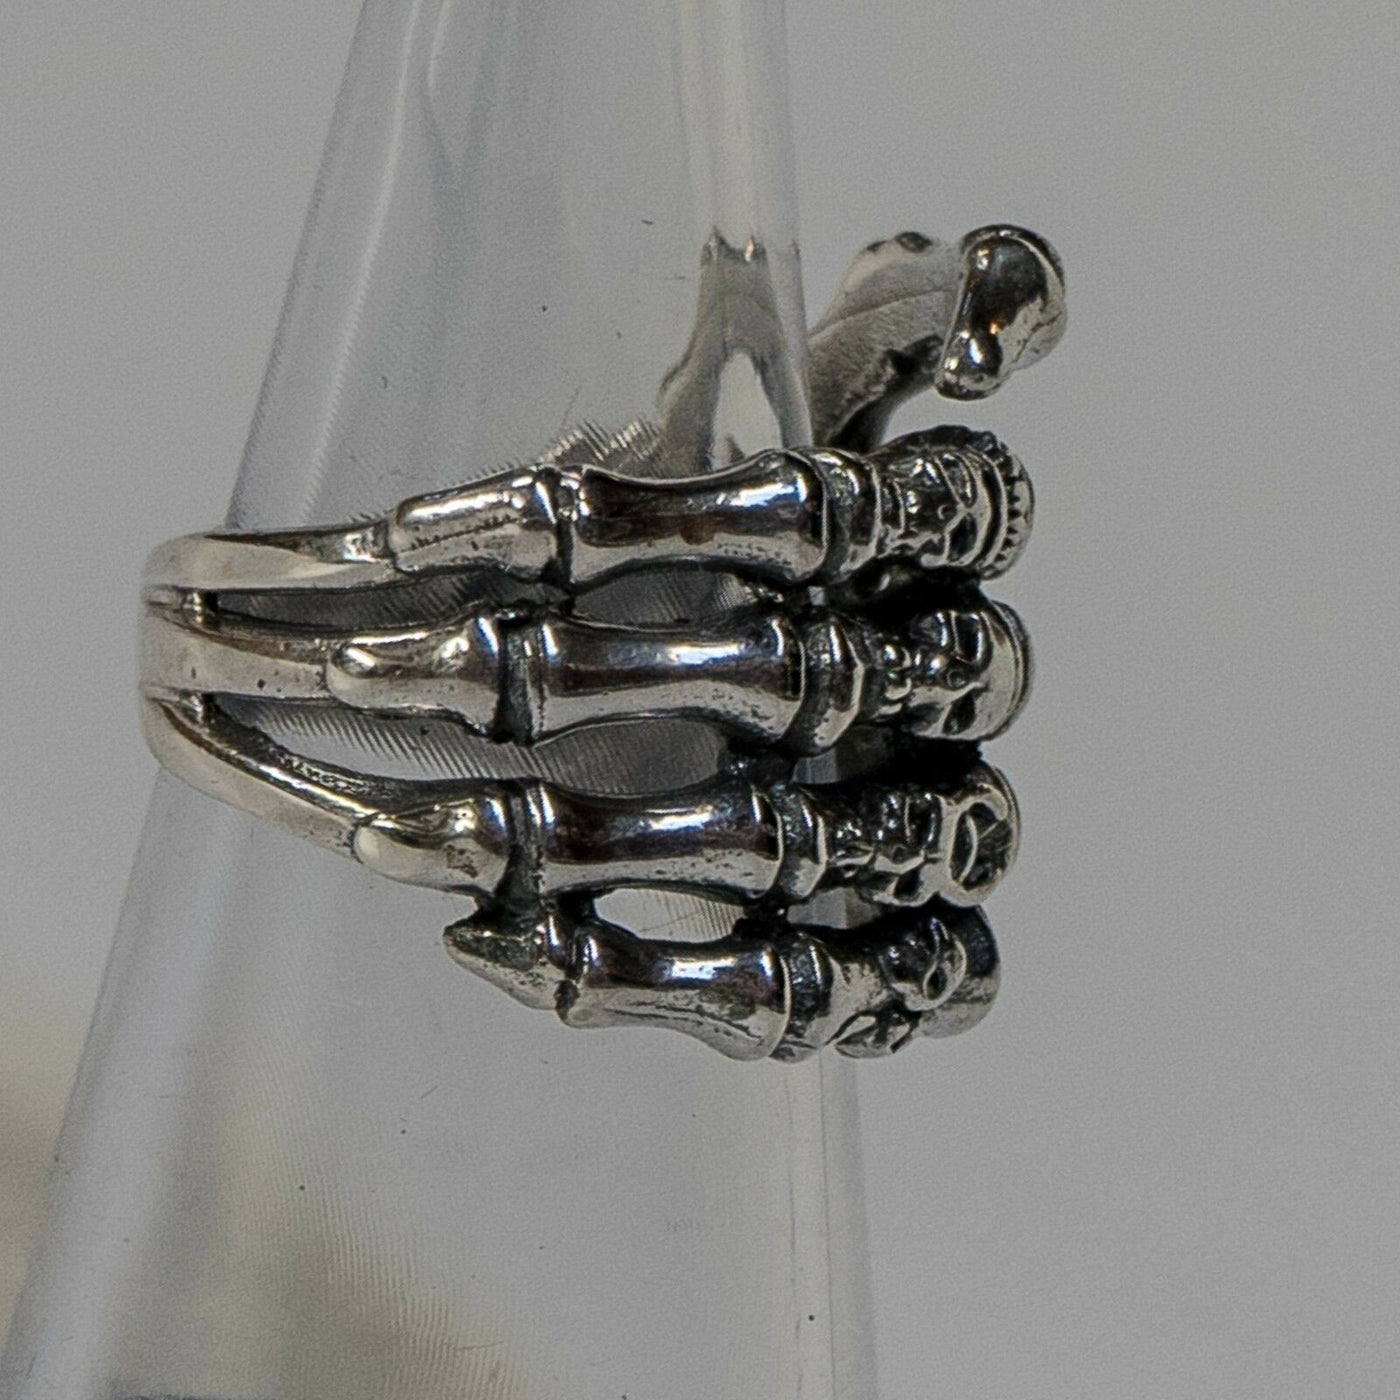 Skeleton Skull Fist Ring 925 sterling silver Available in M - Z (ask for alternative sizes)